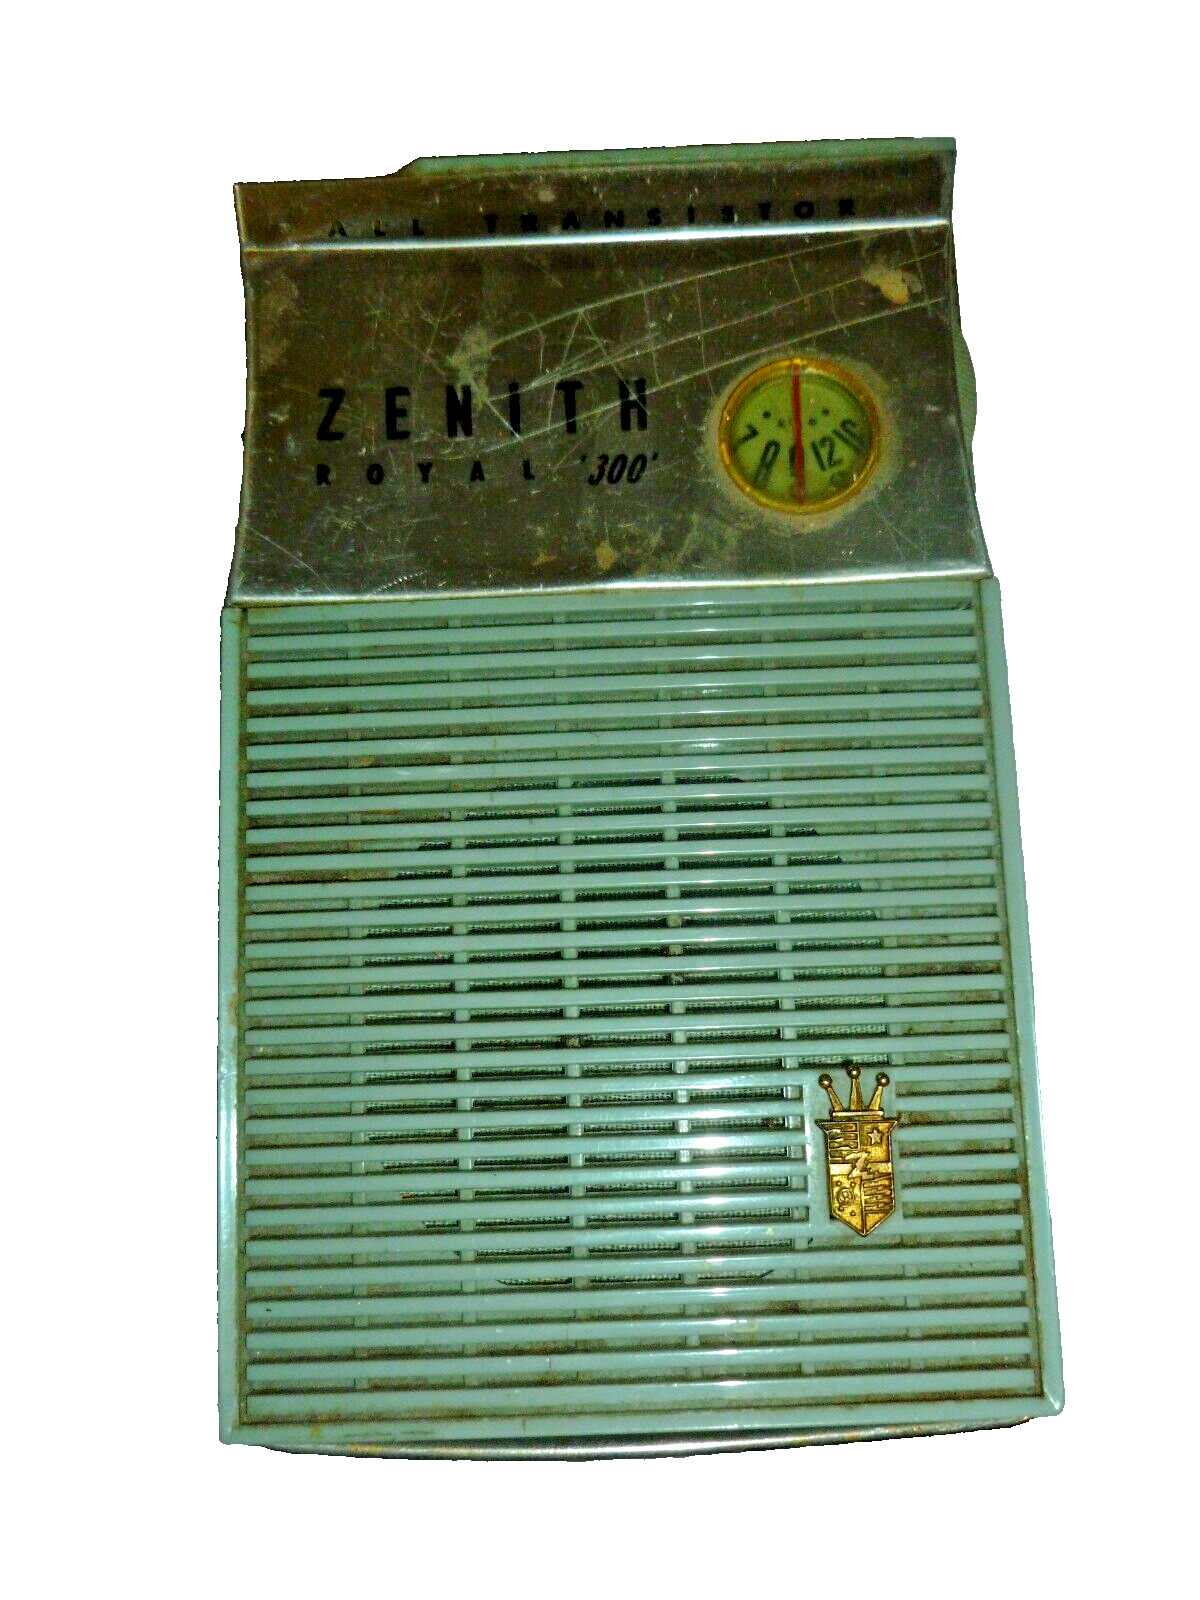 Vintage Zenith Royal 300 Portable Broadcaster All Transistor Radio Parts Repair